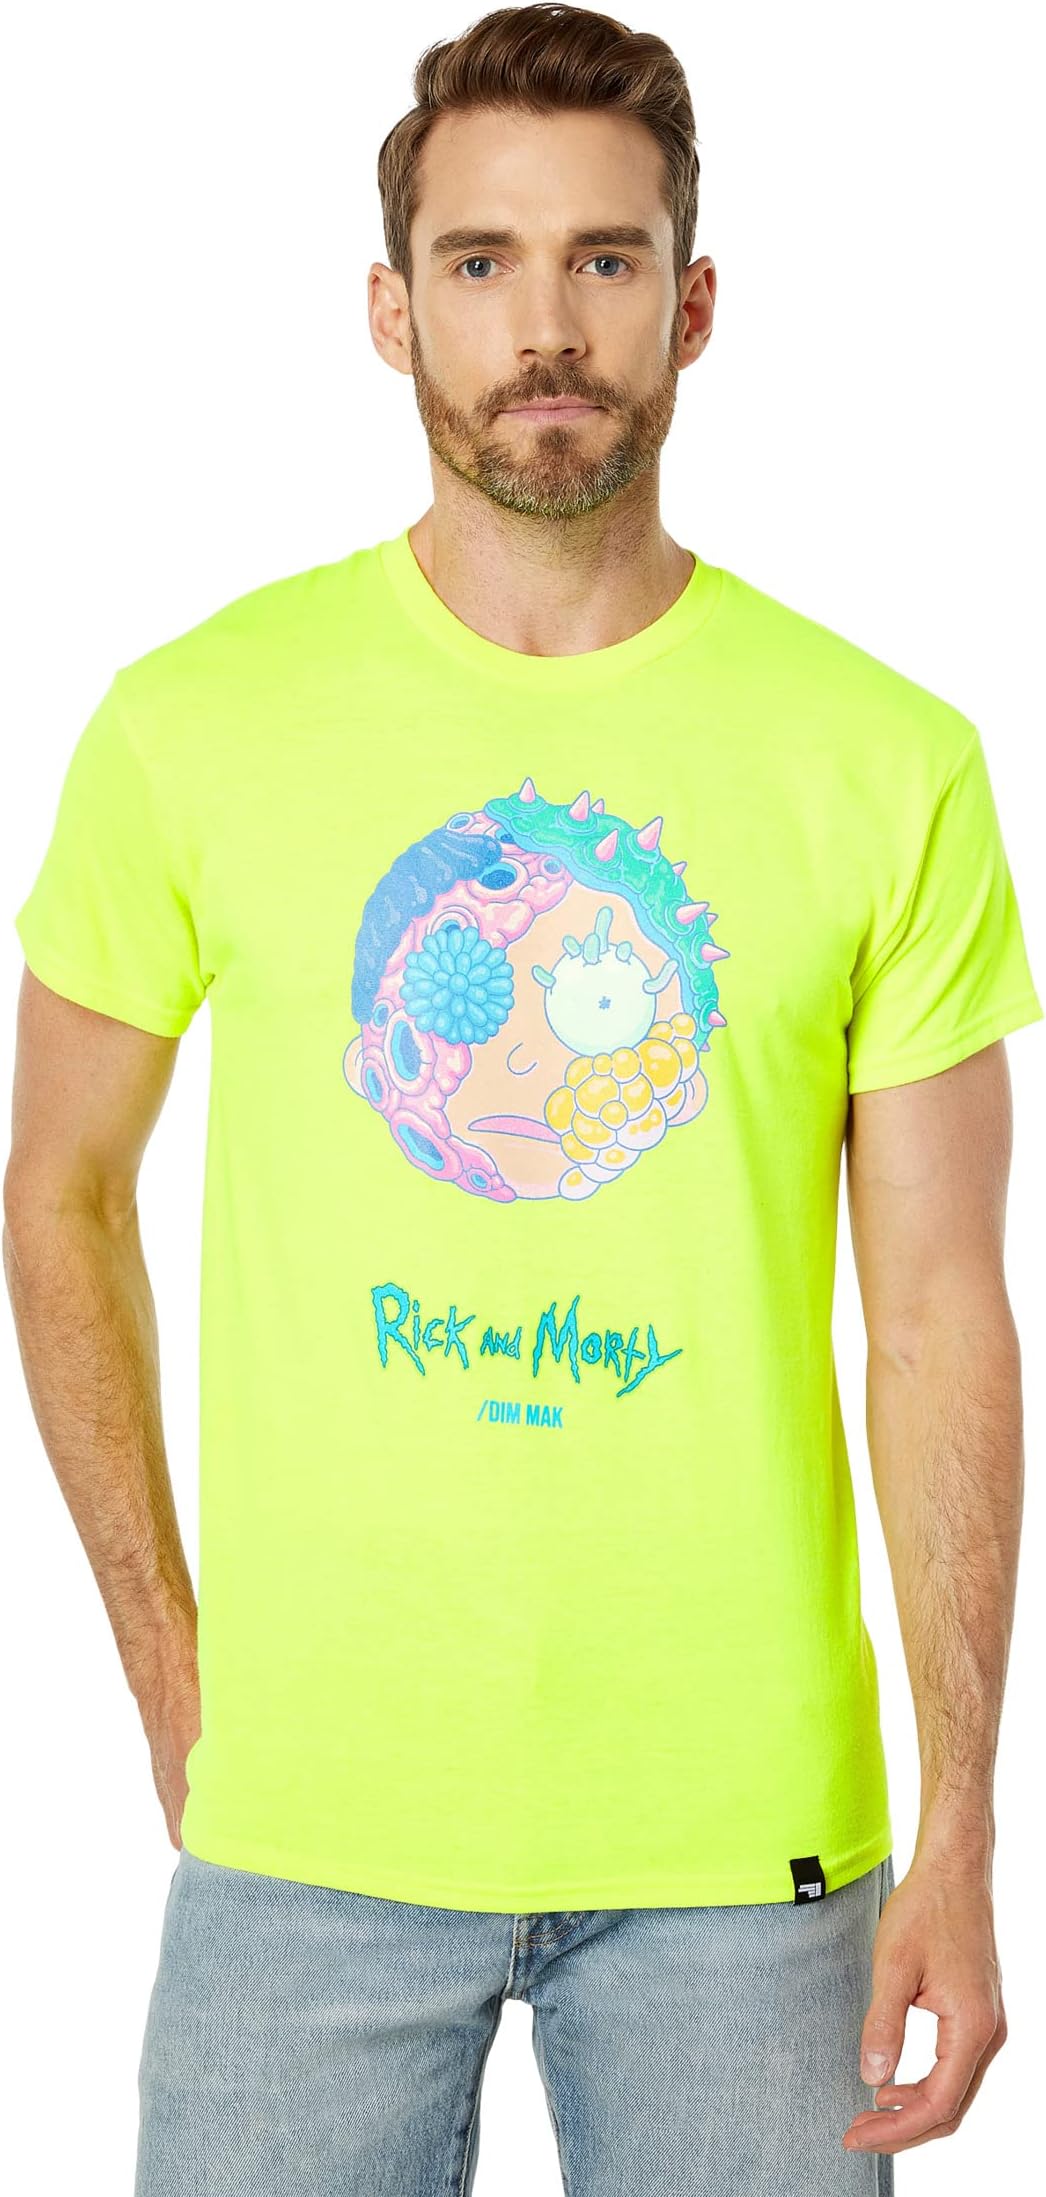 Dim Mak x Rick and Morty - футболка Морти, цвет Safety Green набор rick and morty блокнот морти кардхолдер чёрный